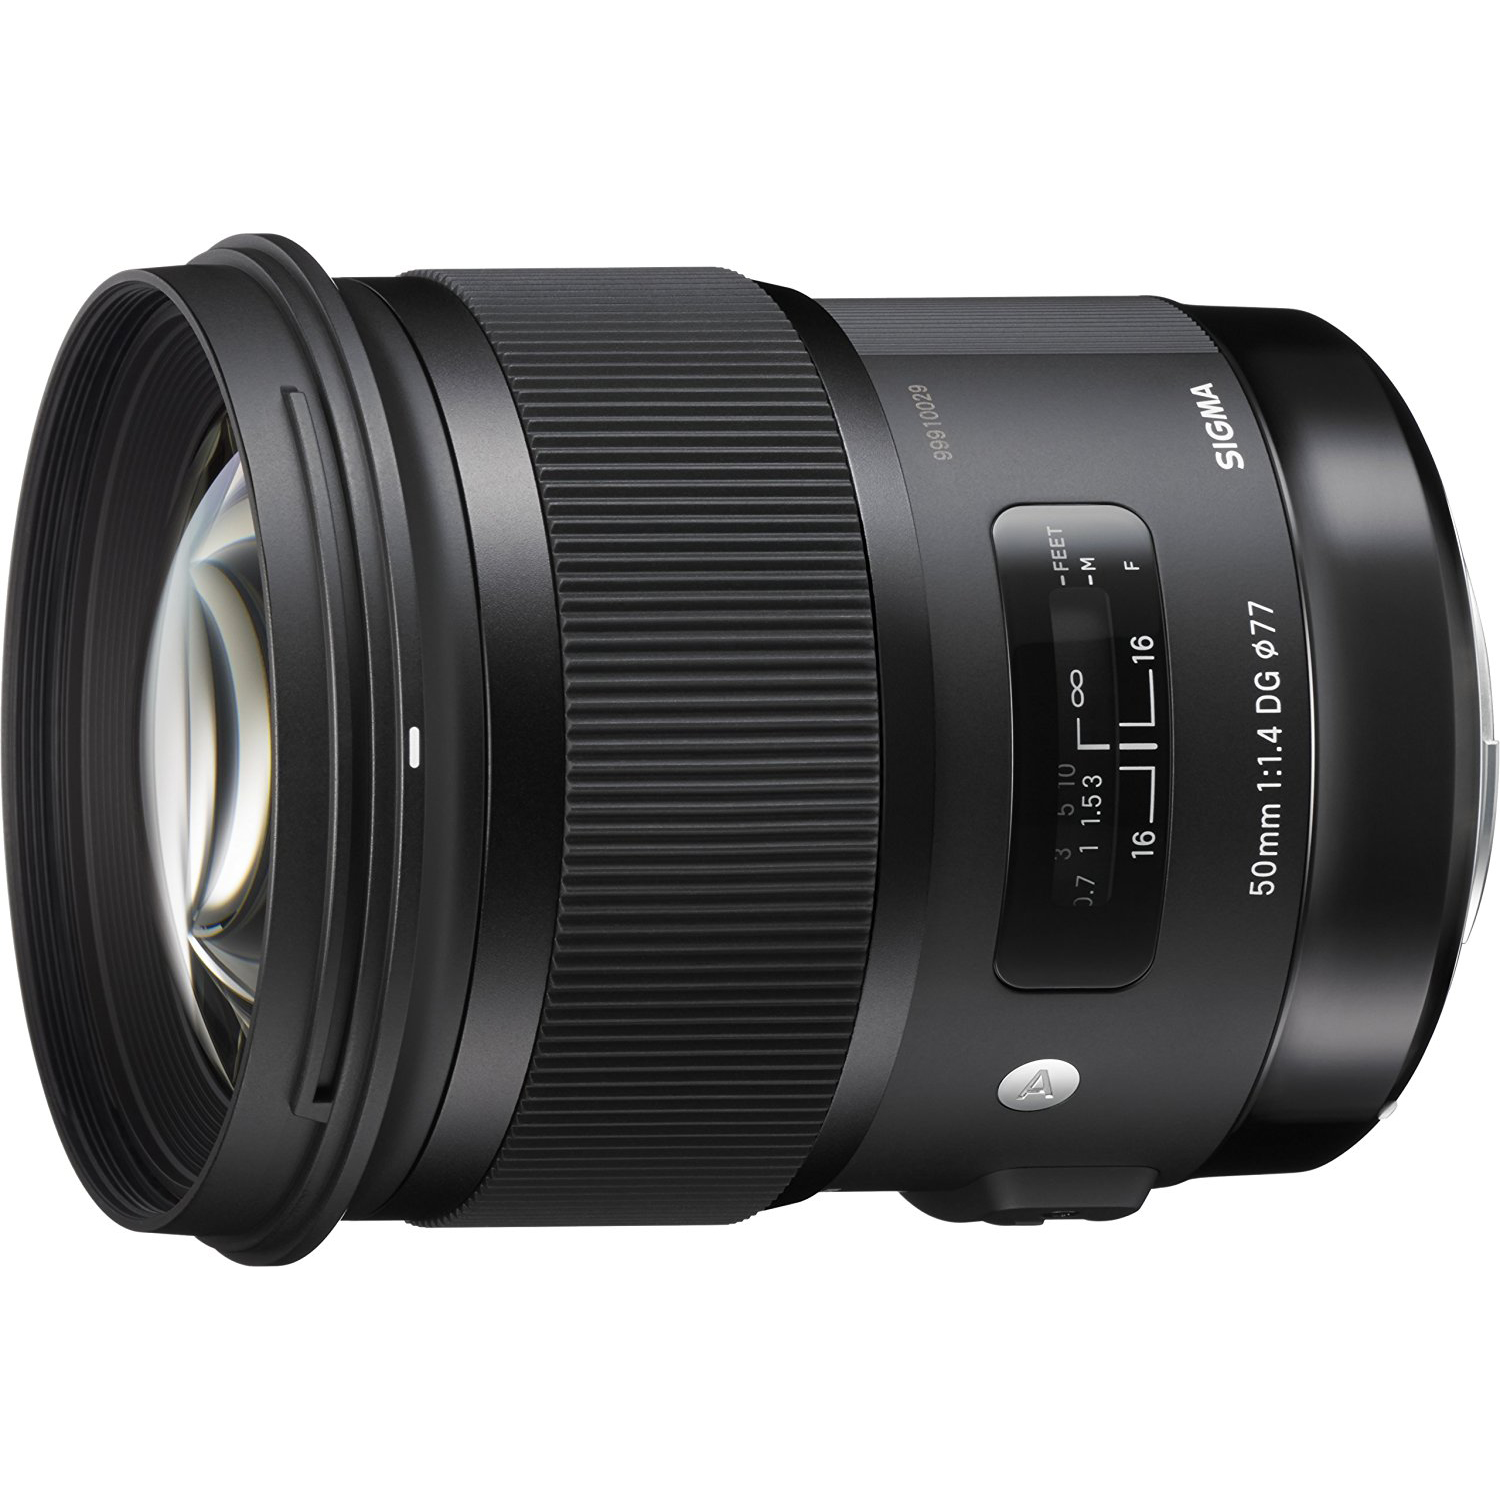 Sigma 50mm f/1.4 DG HSM Art Lens for Sony E Mount Cameras - 311965